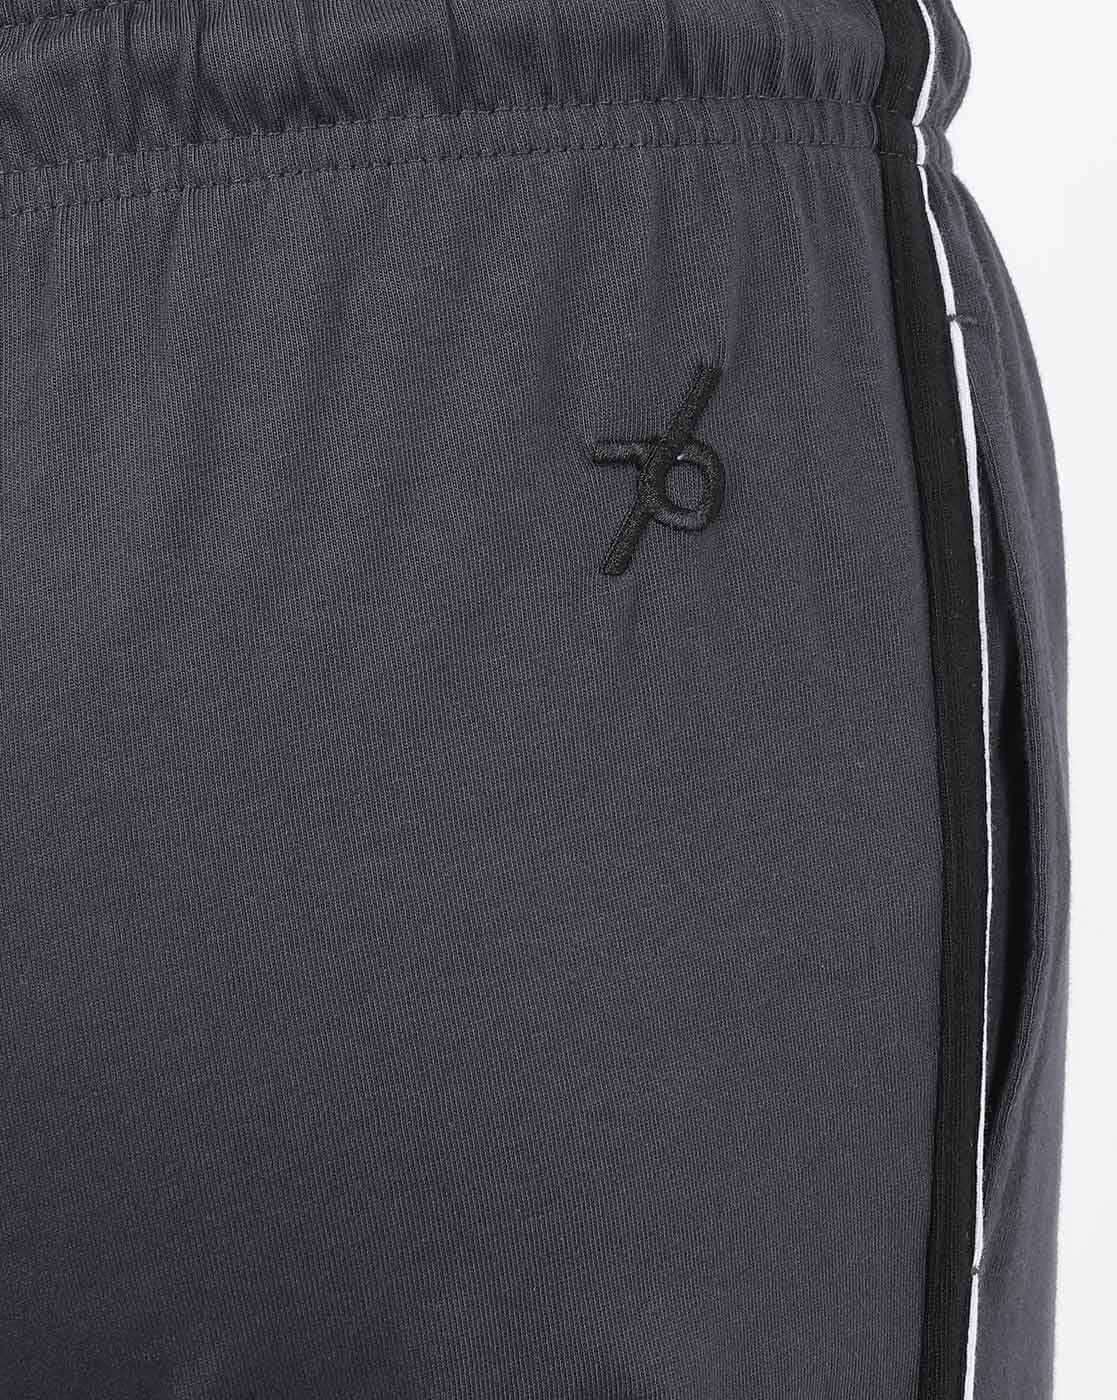 Jockey Men's Relaxed Fit Track pants(9500-0103-CH-SR_L_Charcoal